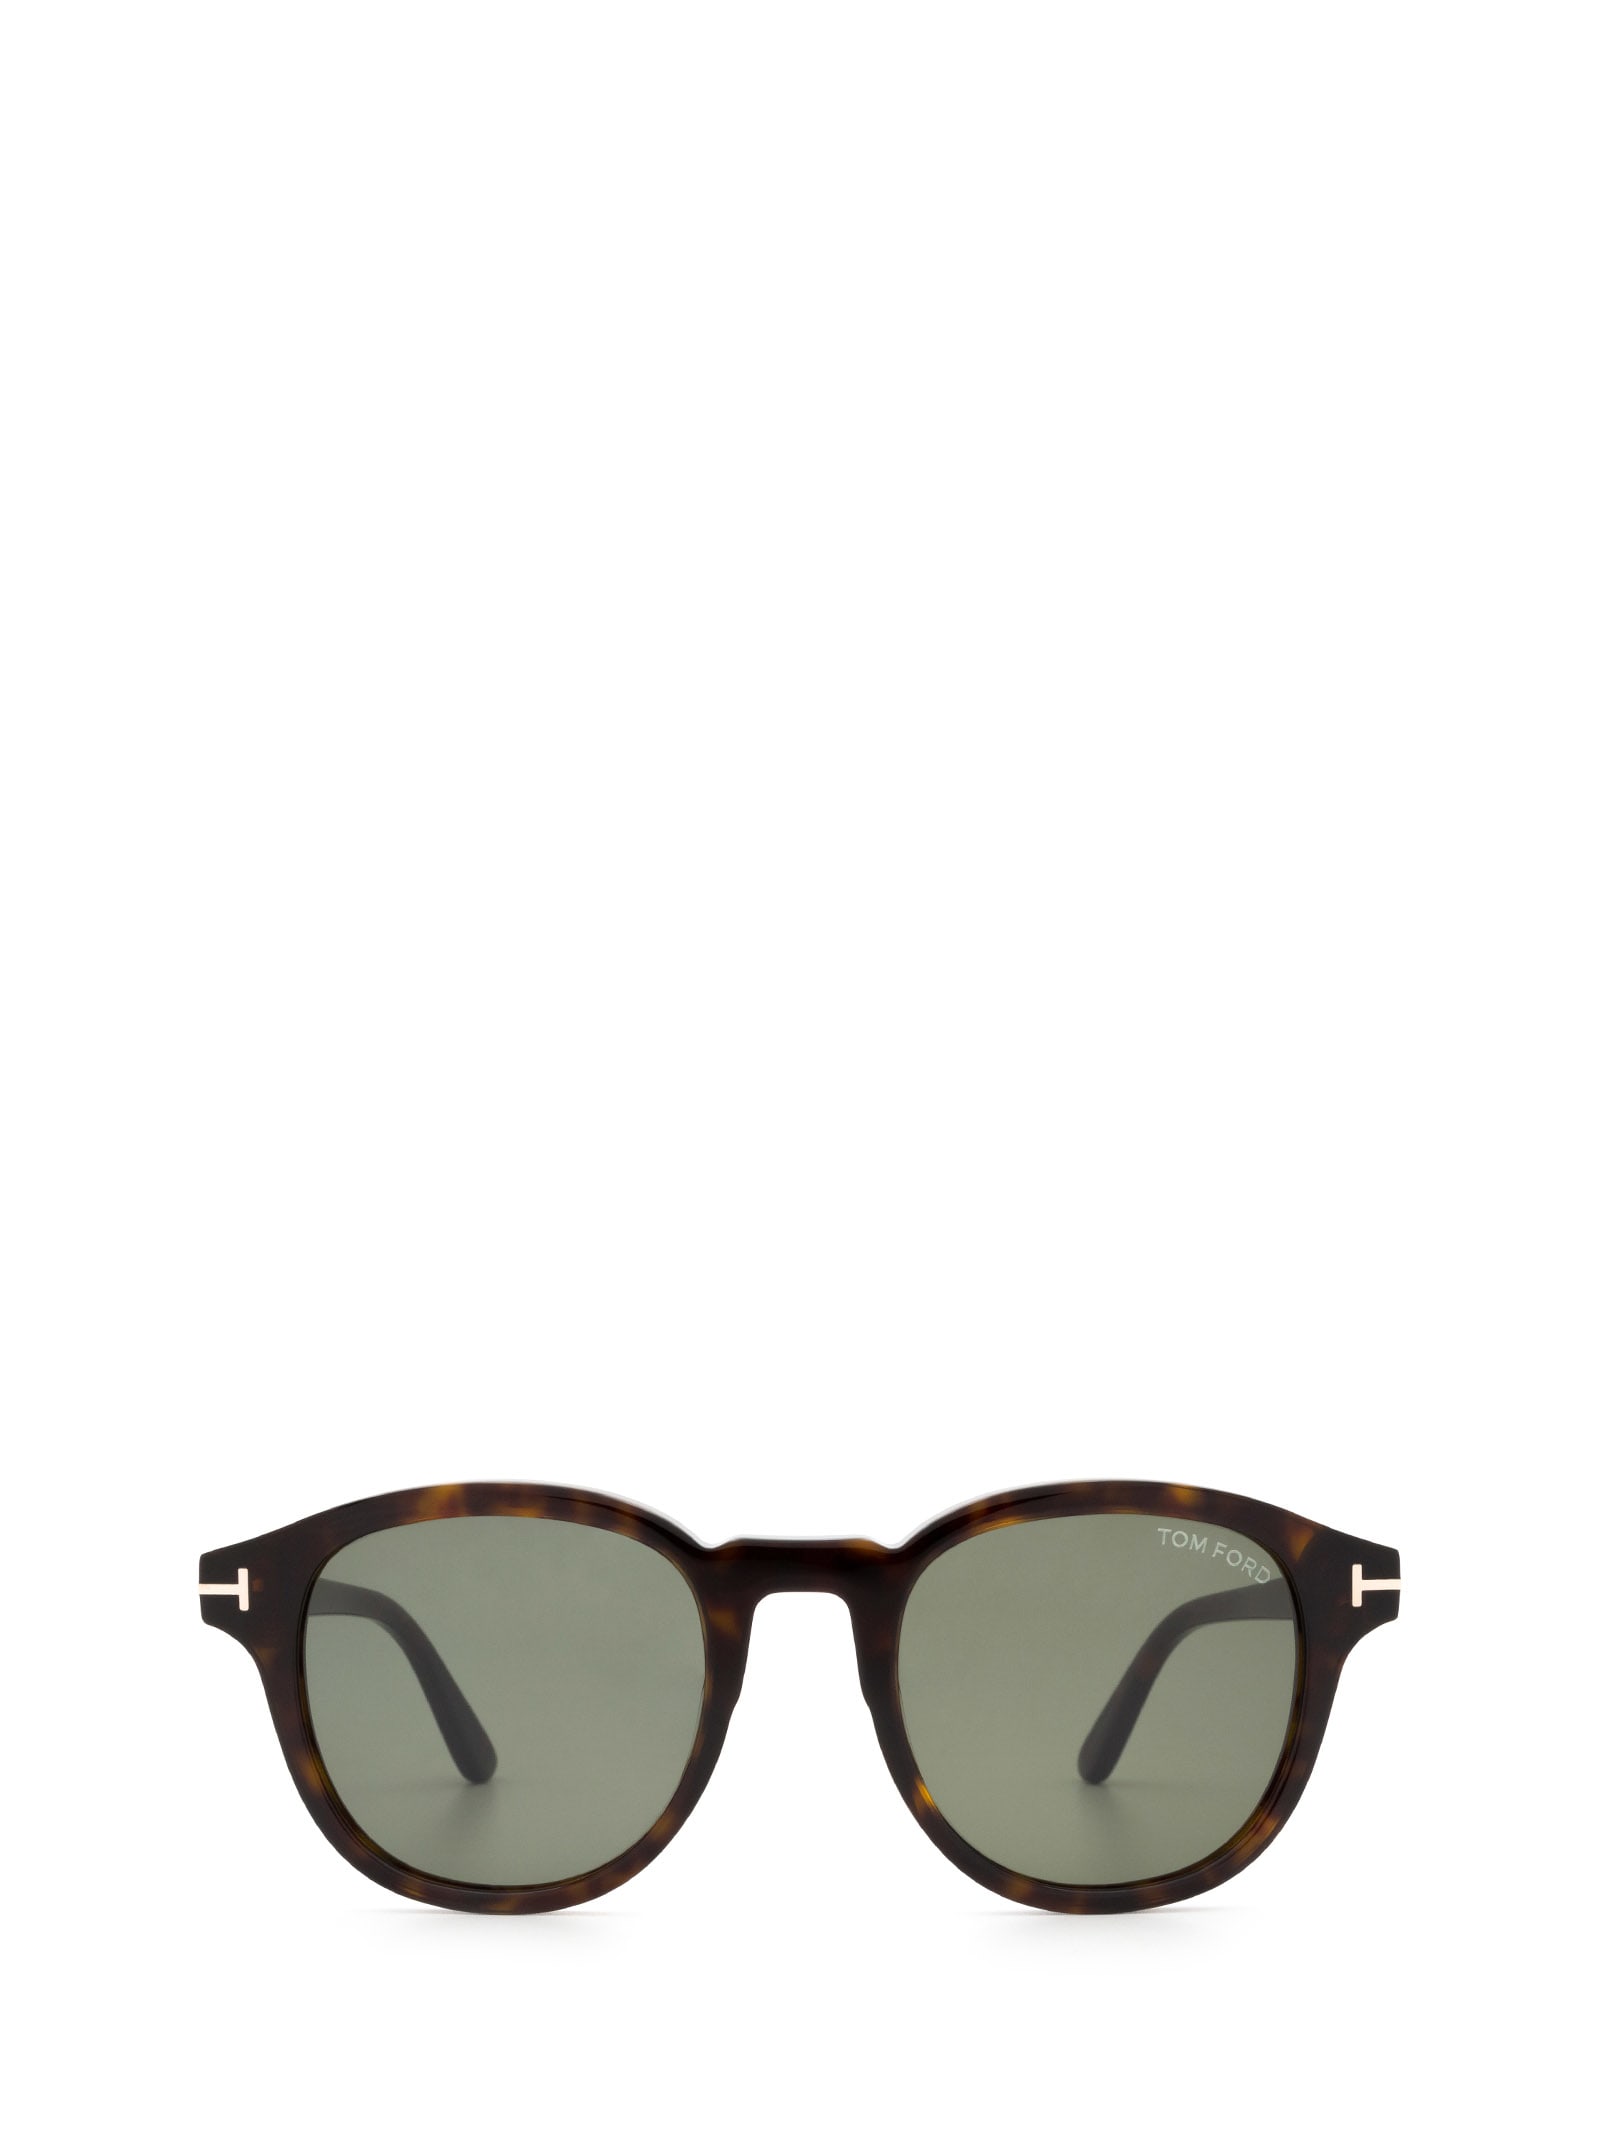 Ft0752 Dark Havana Sunglasses